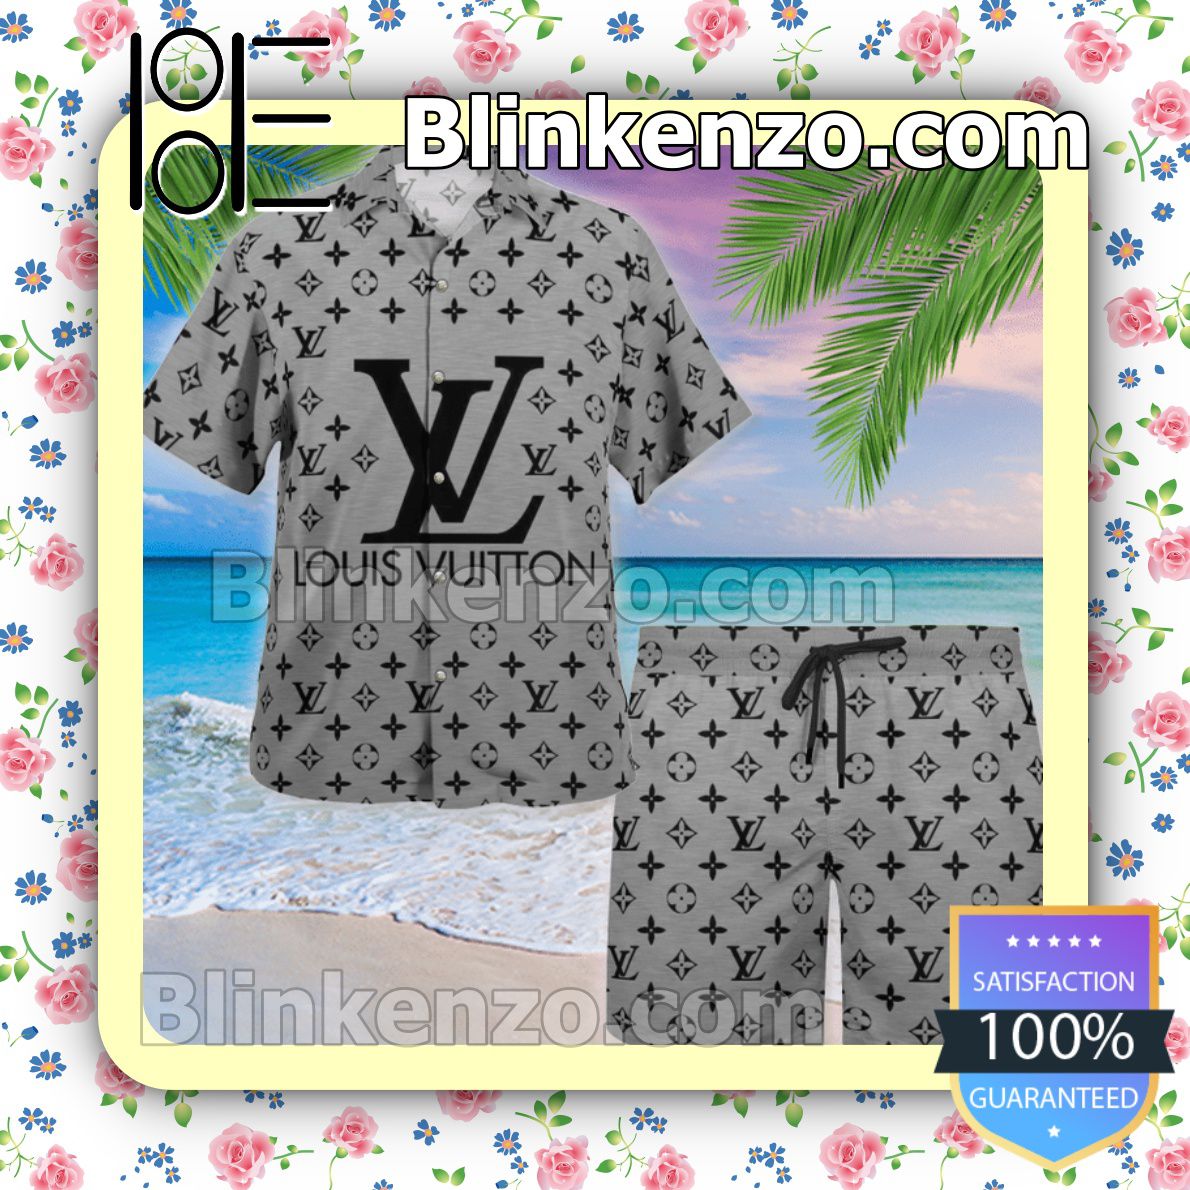 Louis Vuitton Monogram With Big Logo Grey Luxury Beach Shirts, Swim Trunks